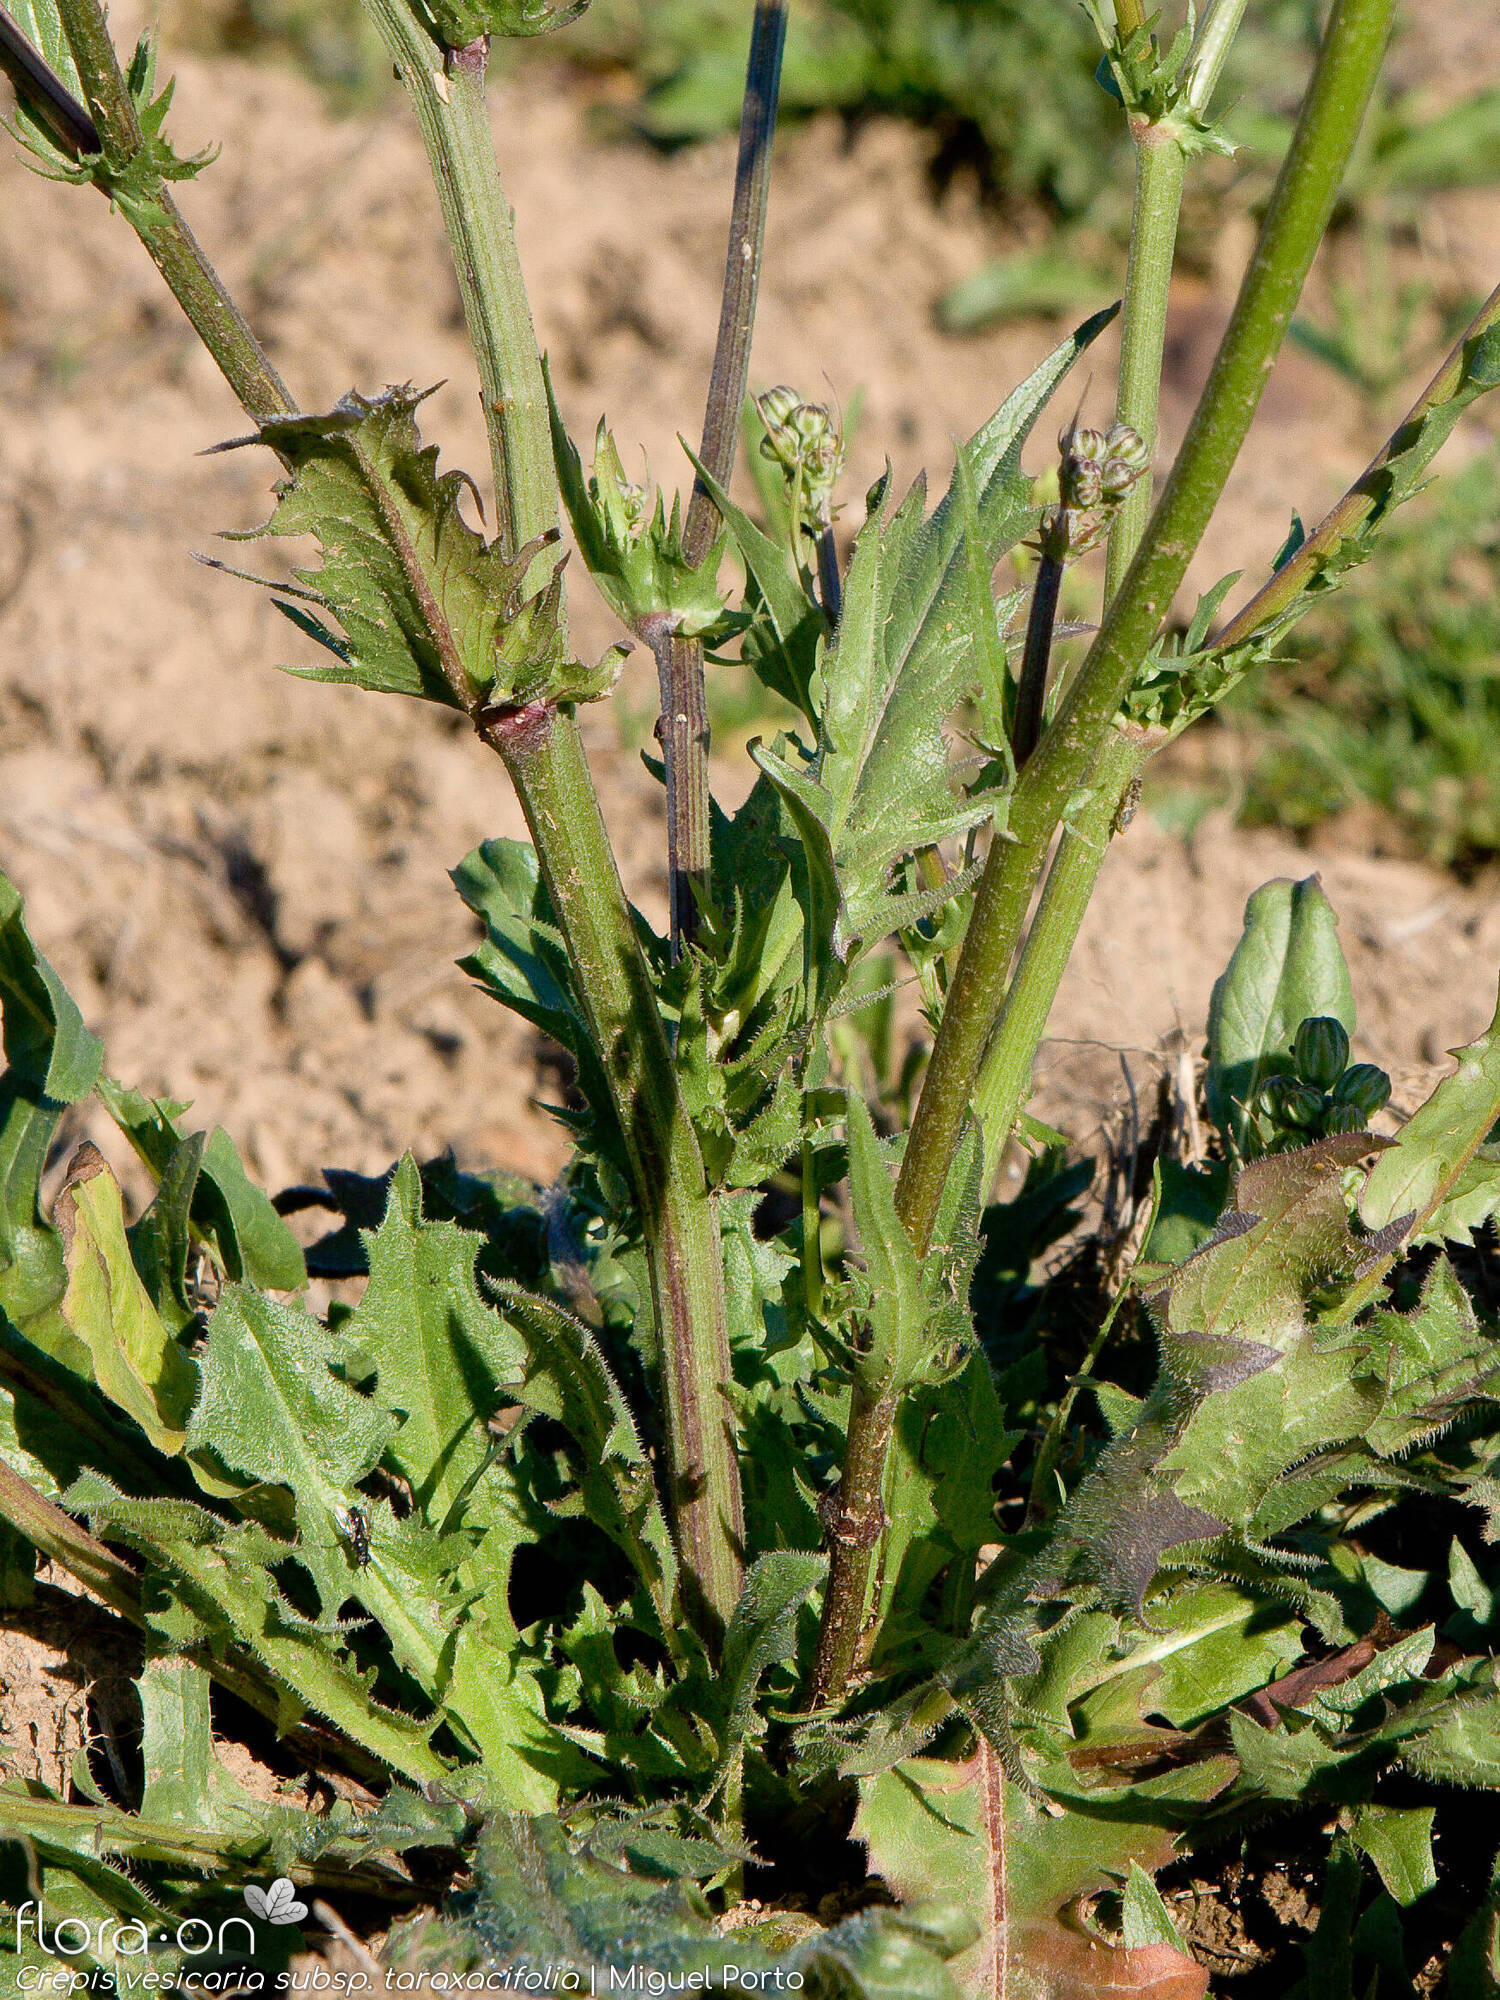 Crepis vesicaria taraxacifolia - Caule | Miguel Porto; CC BY-NC 4.0